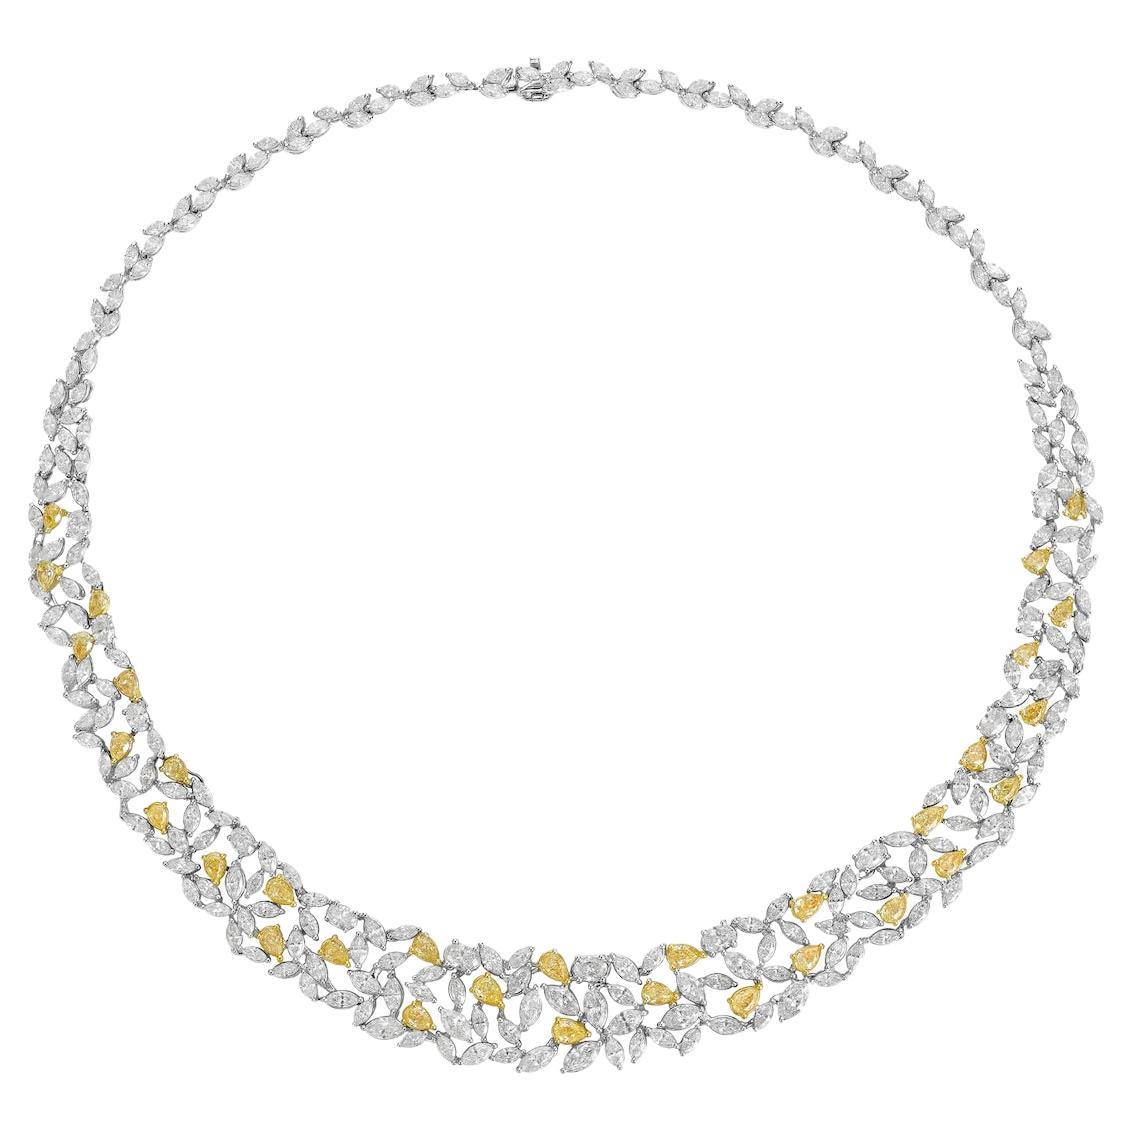 23 Carat Yellow and White Diamond Necklace